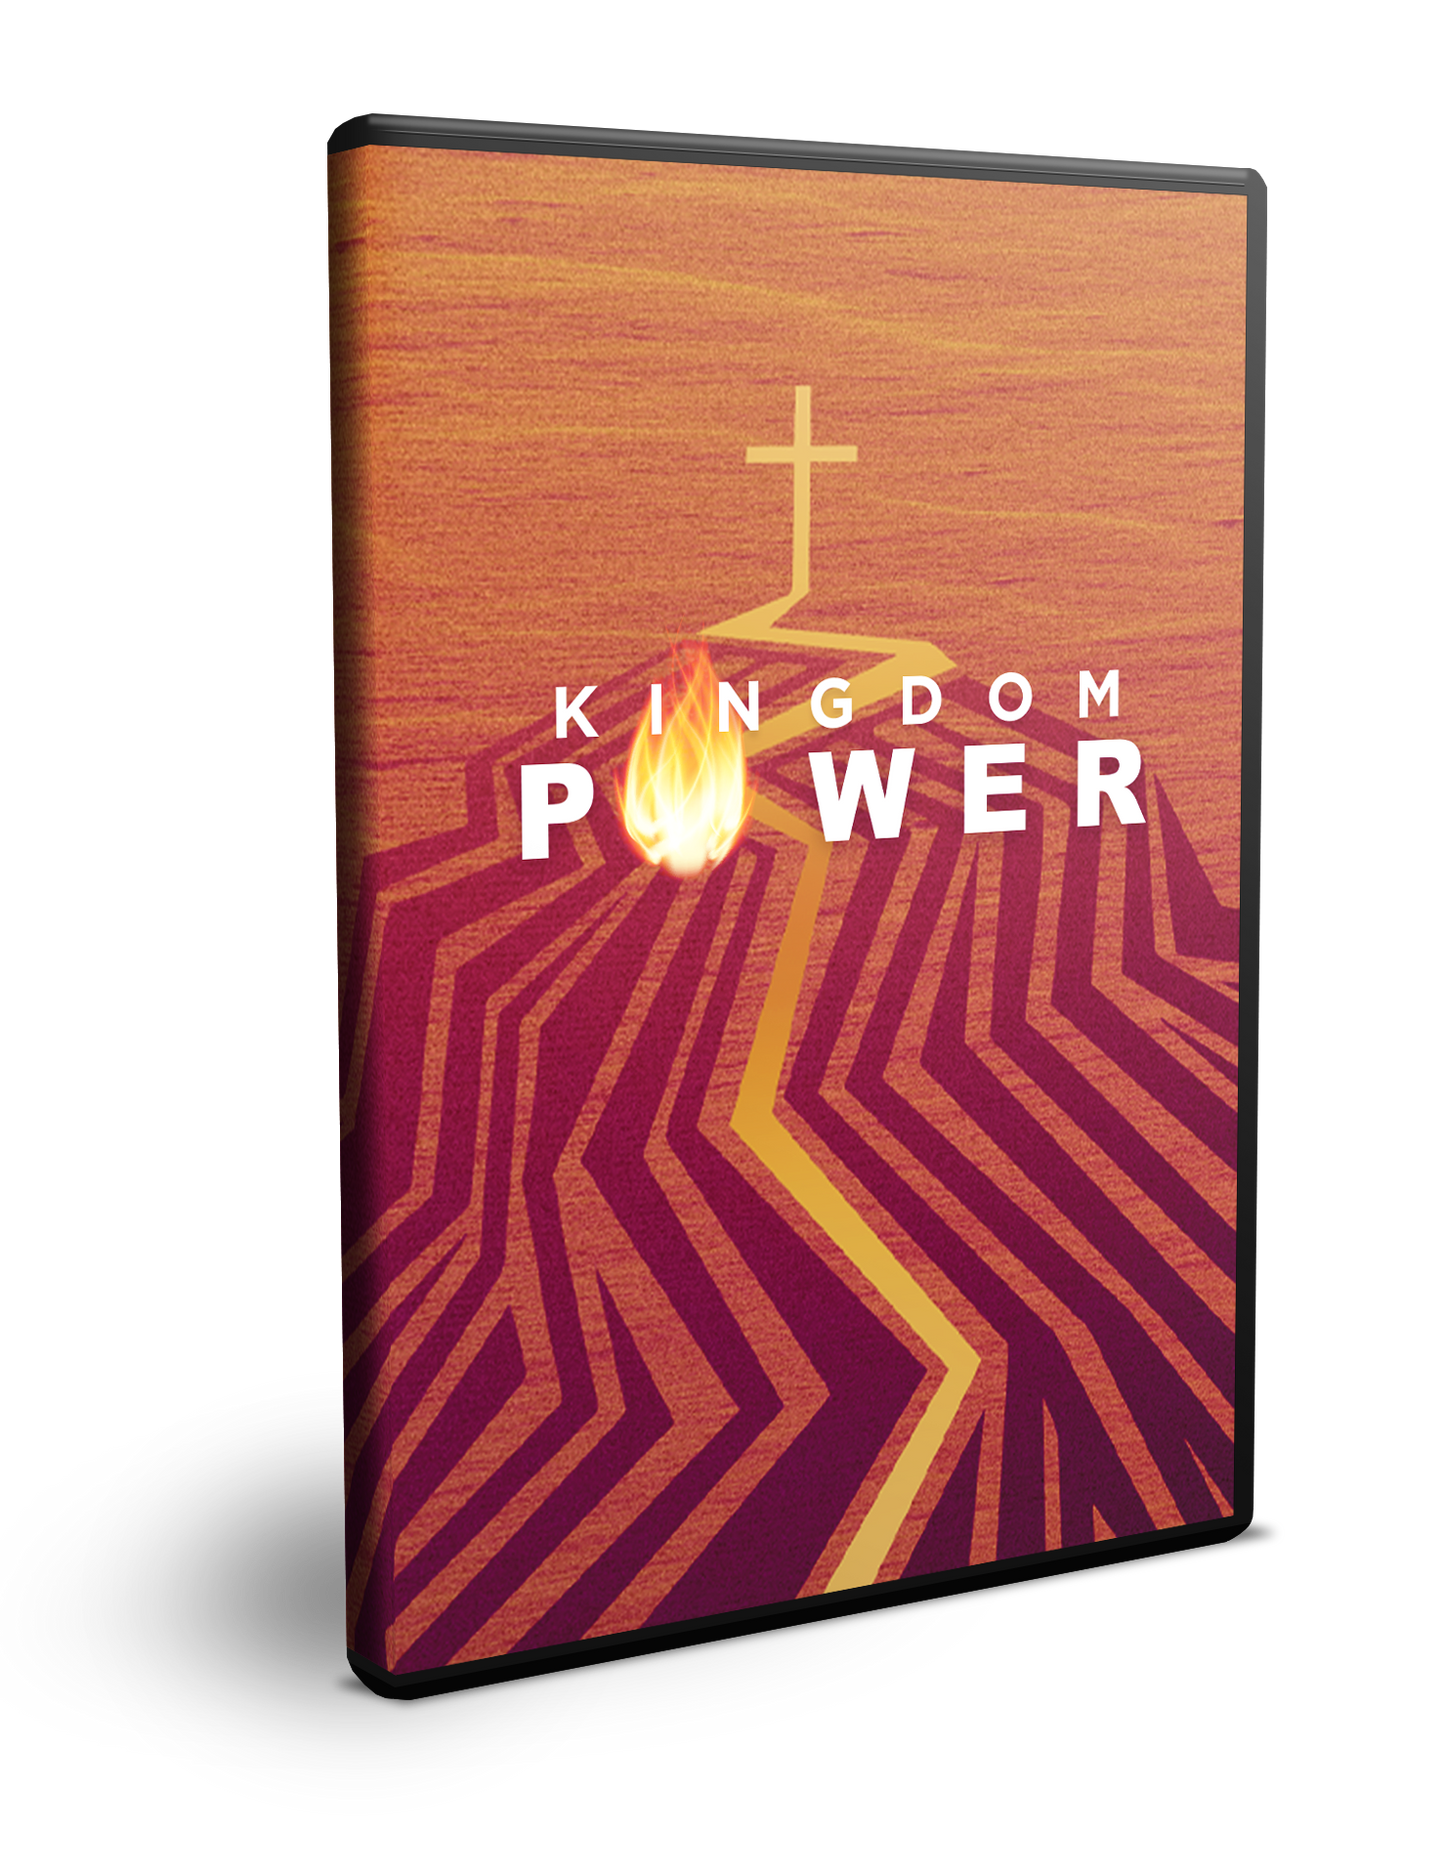 Kingdom Power Volume 1 Series